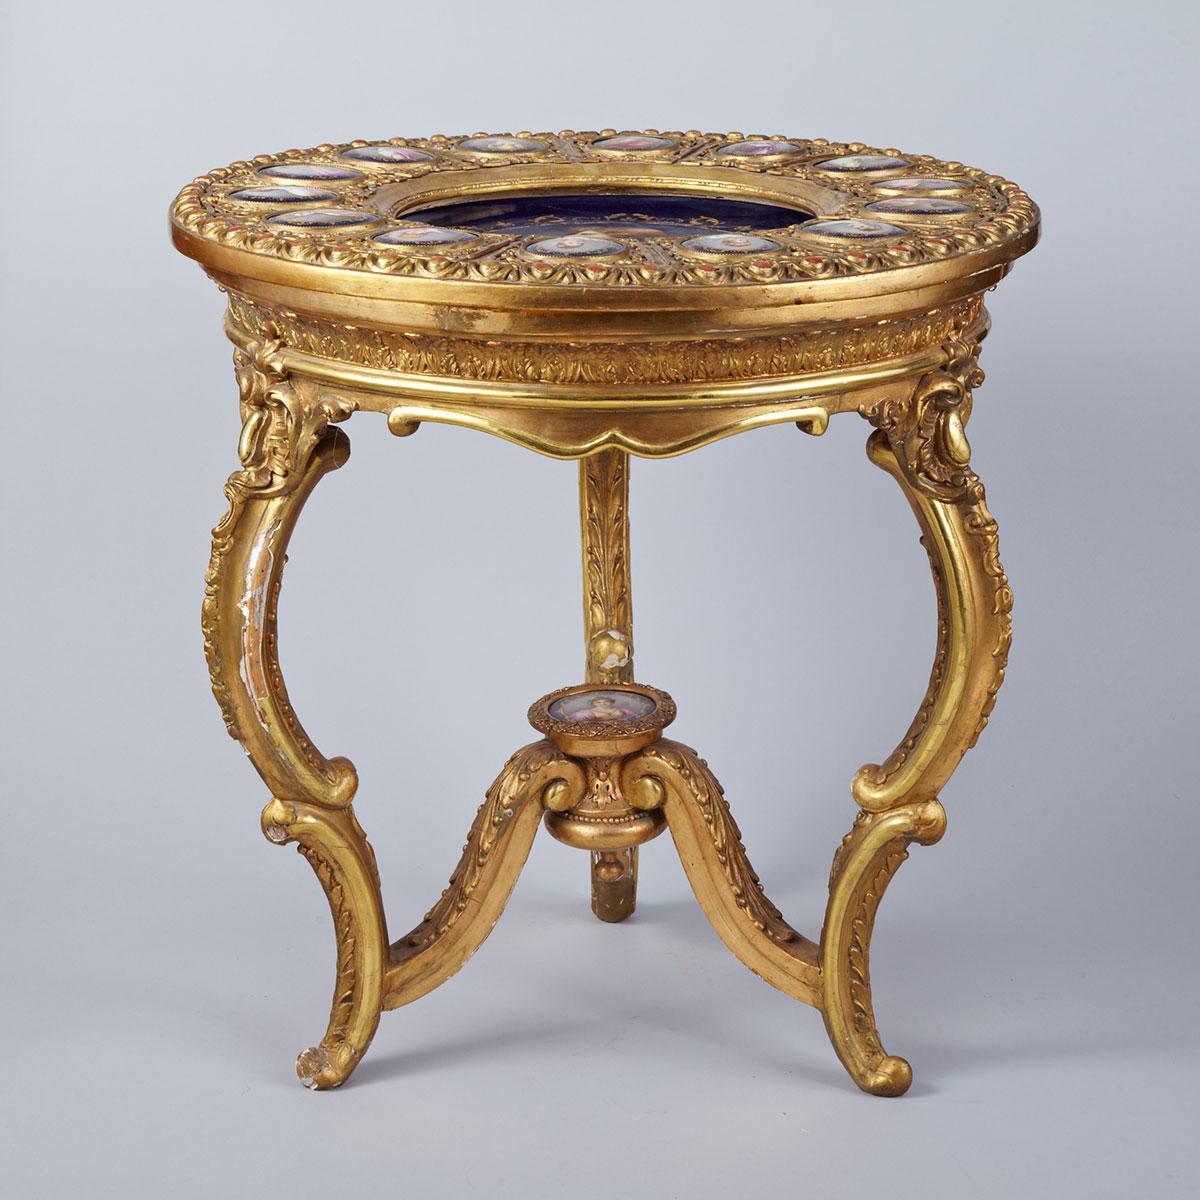 ‘Vienna’ Porcelain Mounted Gilt Wood Centre Table, c.1900